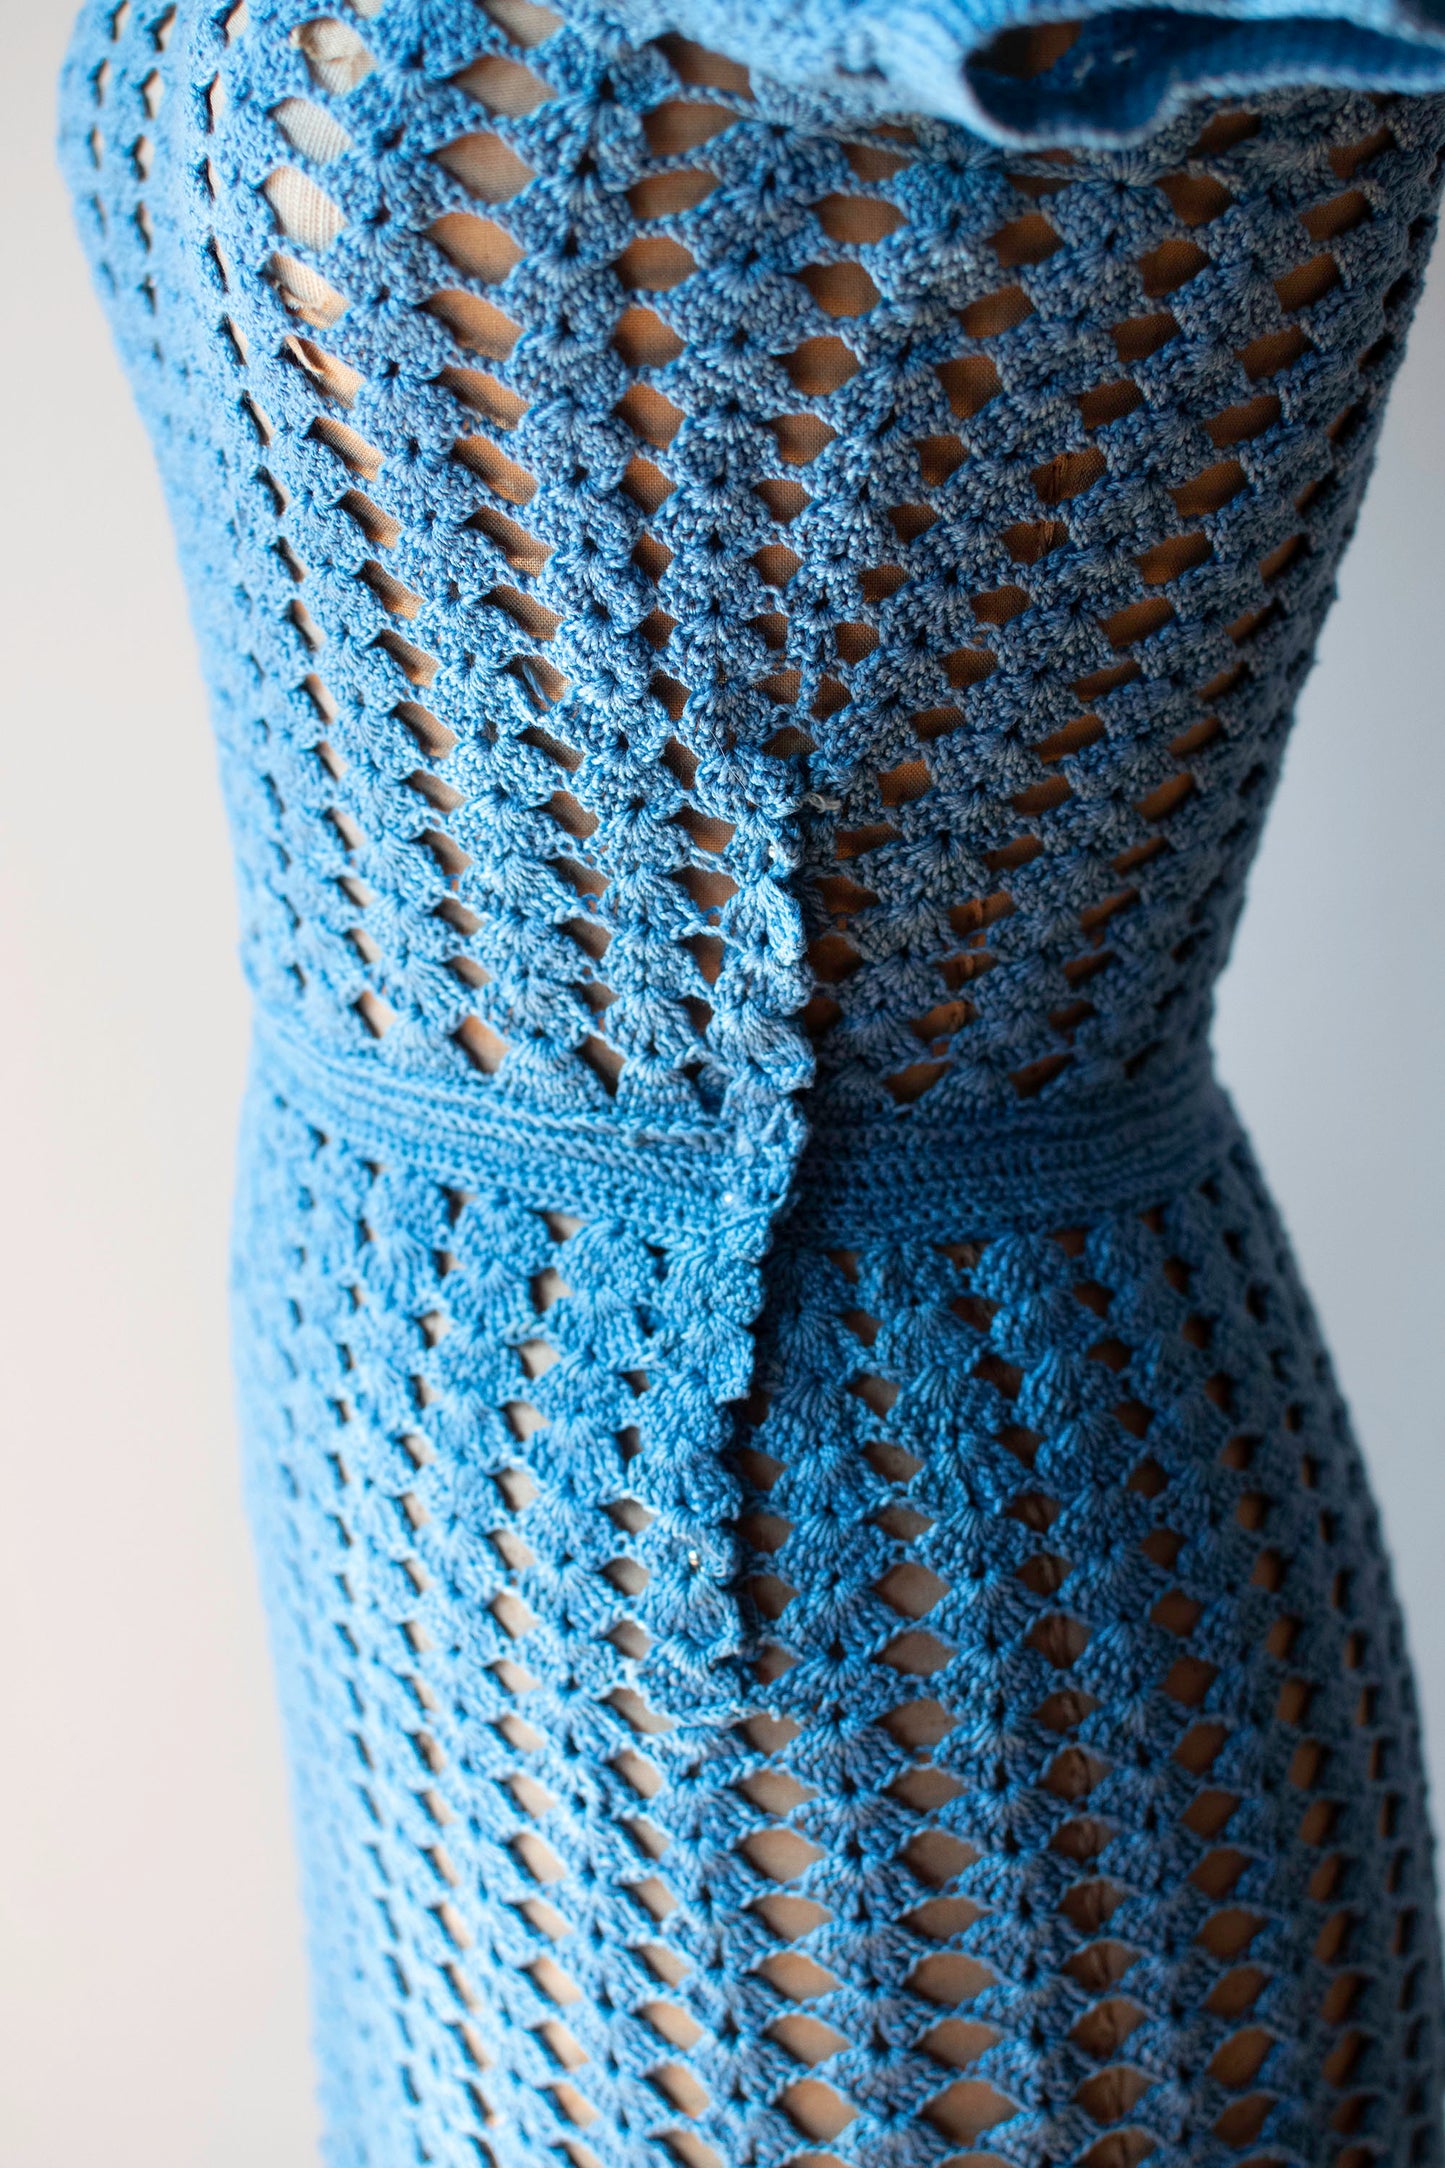 1930s Blue Crochet Dress